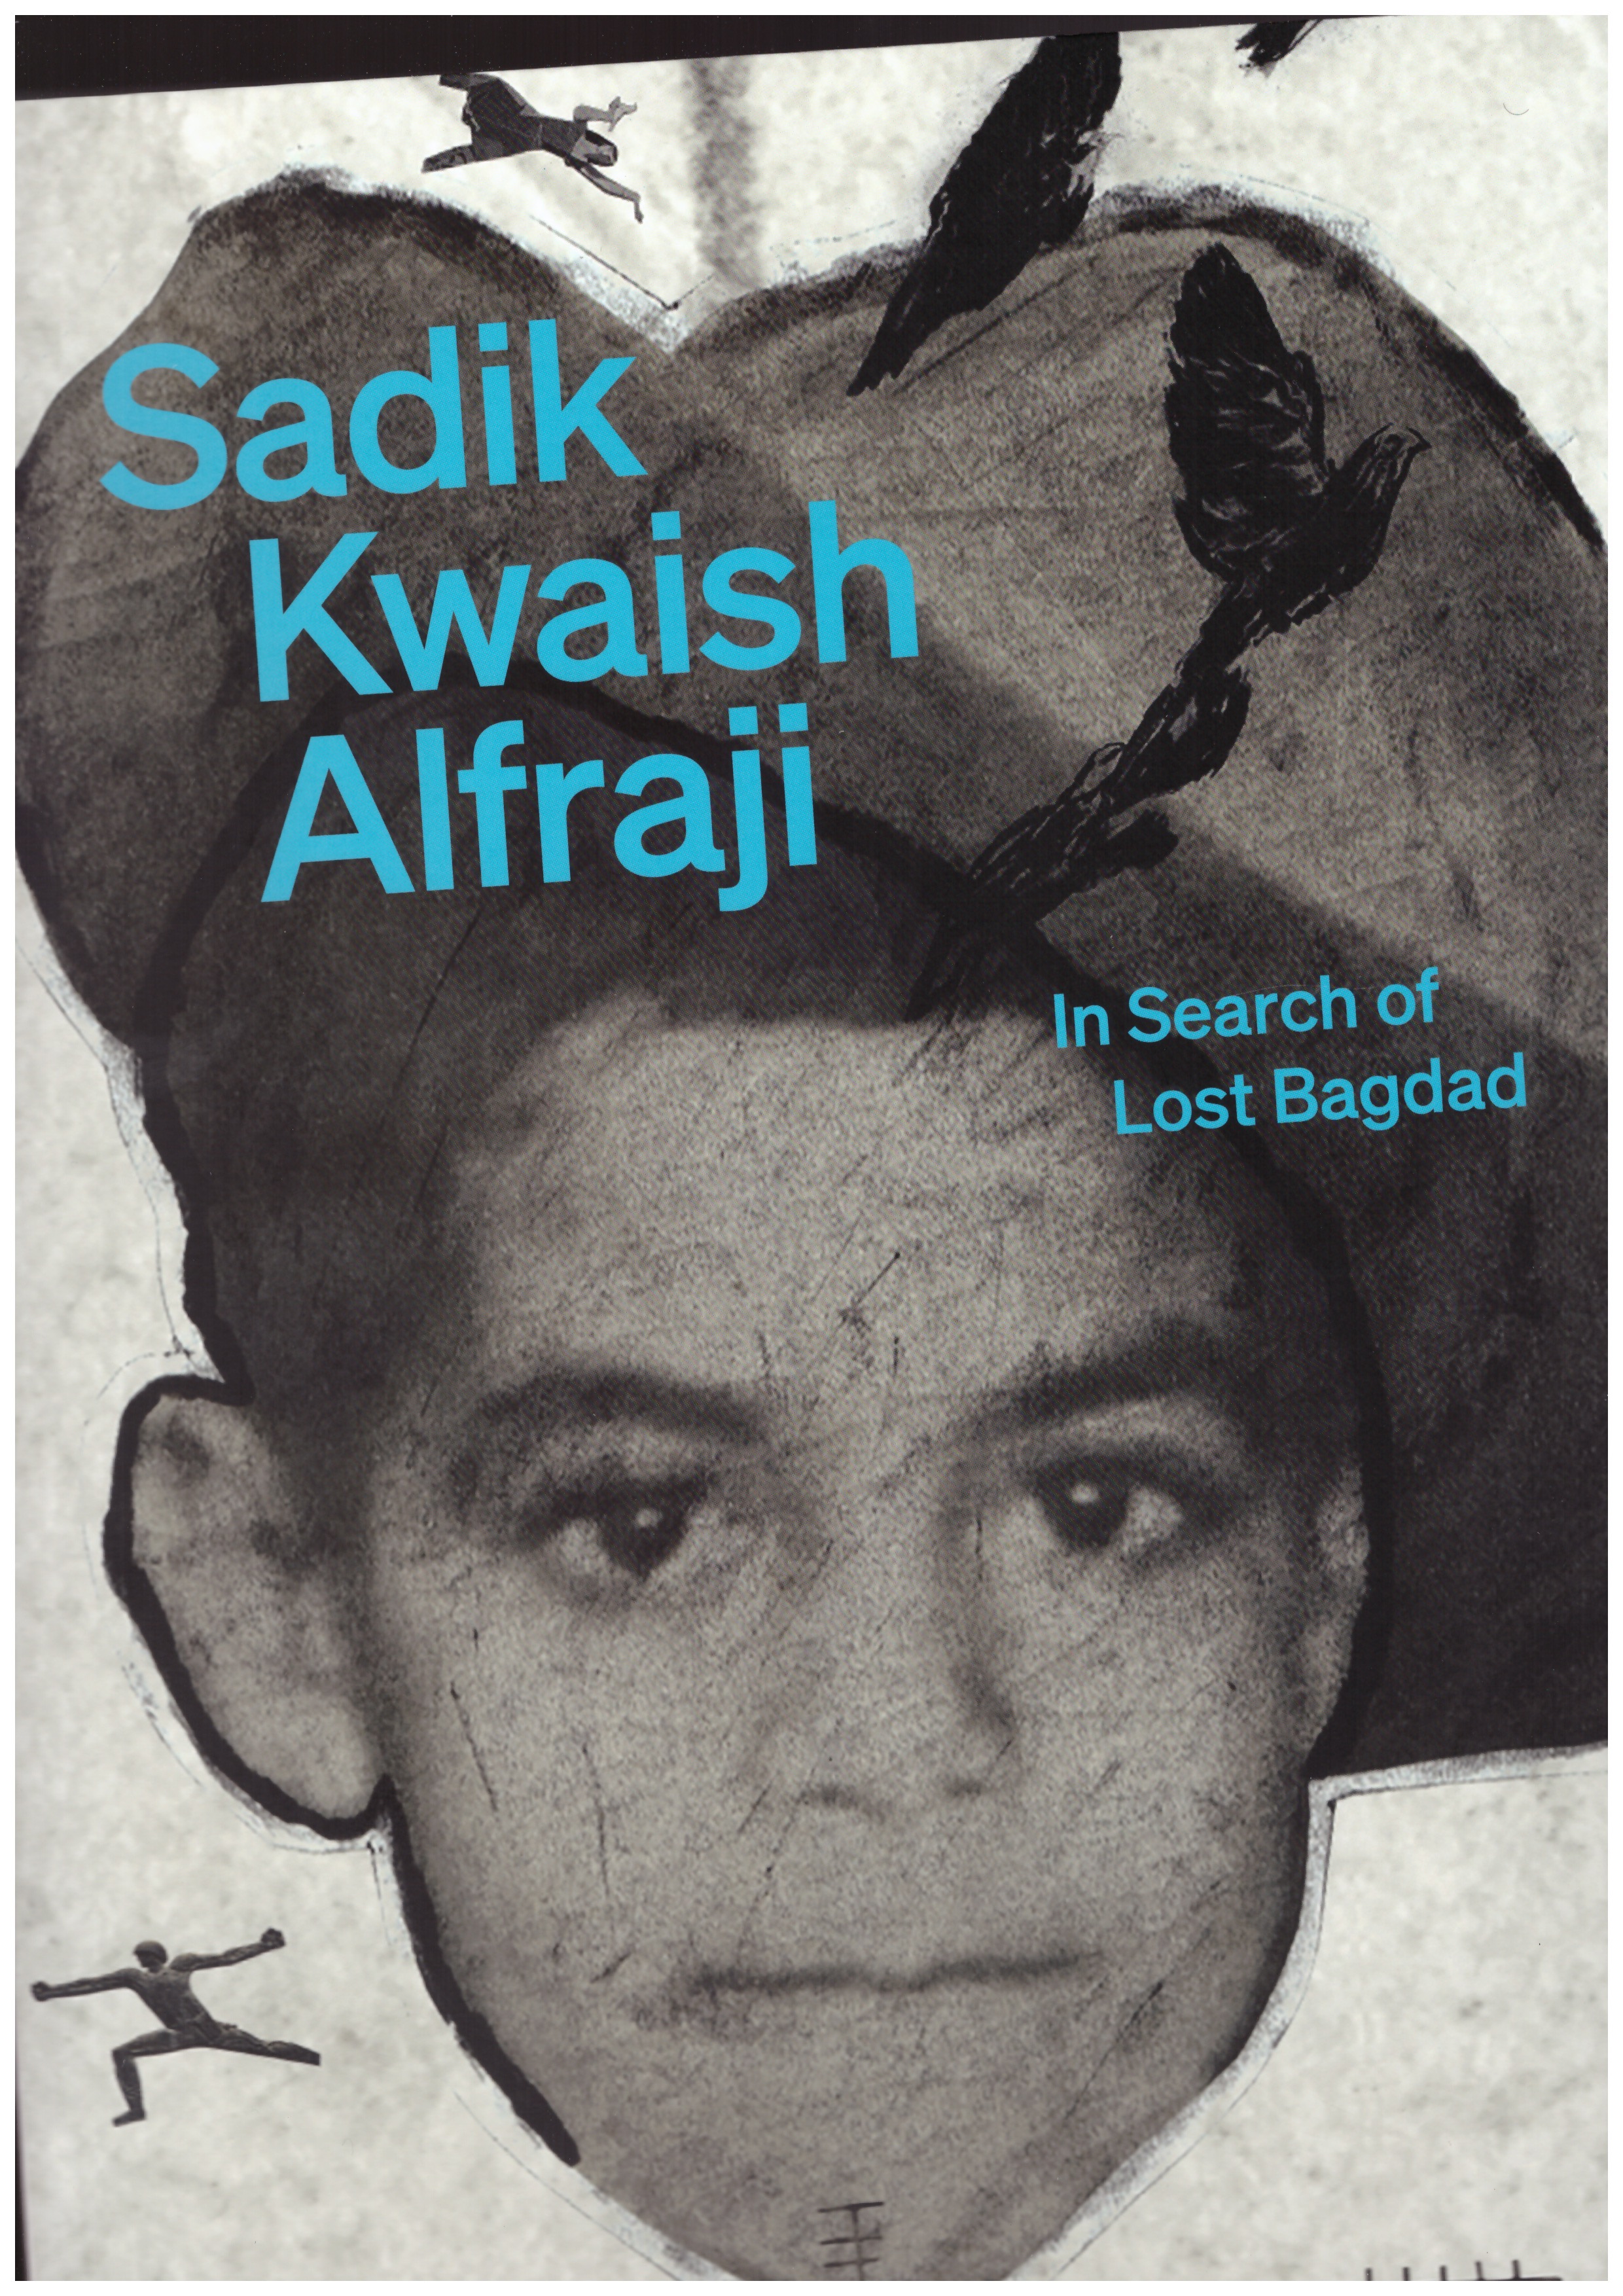 KWAISH ALFRAJI, Sadik - In Search of Lost Bagdad